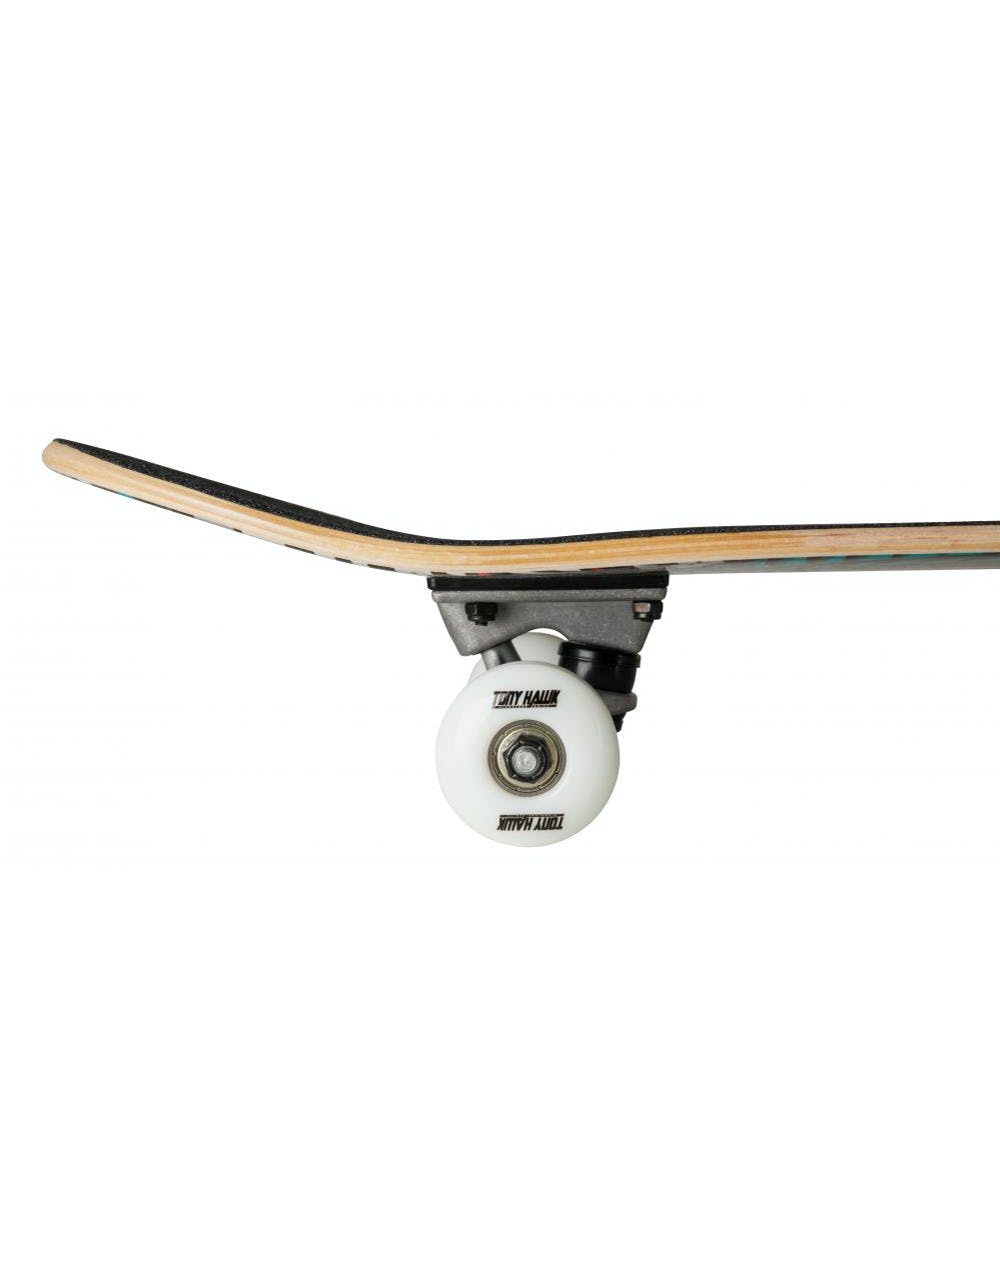 Tony Hawk 180 Downtown Mini Complete Skateboard - 7.375"